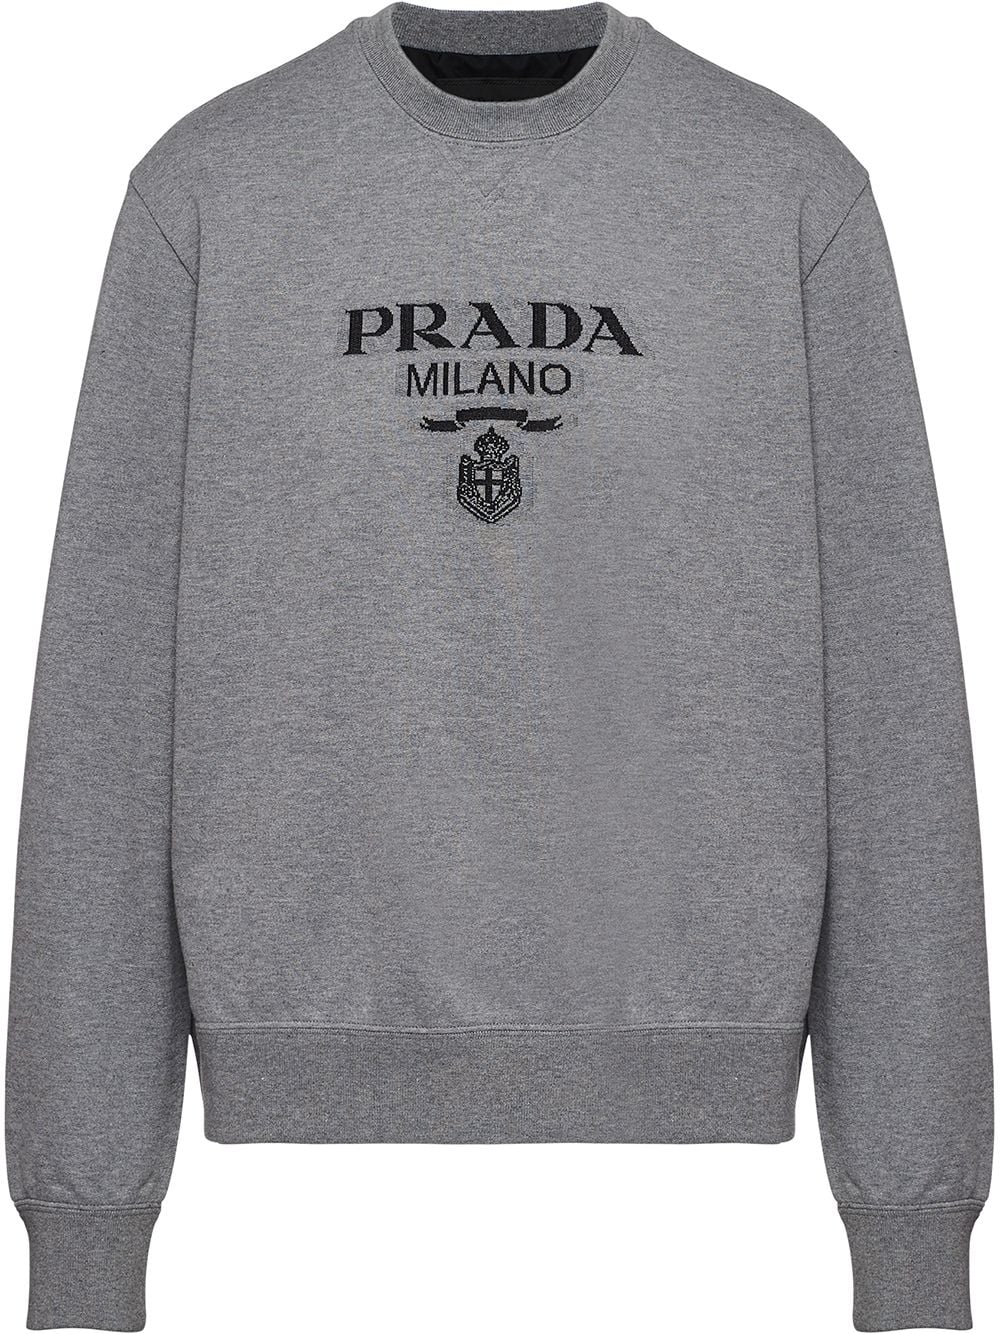 Prada Cotton Jersey Logo Crewneck Sweatshirt Grey/Black